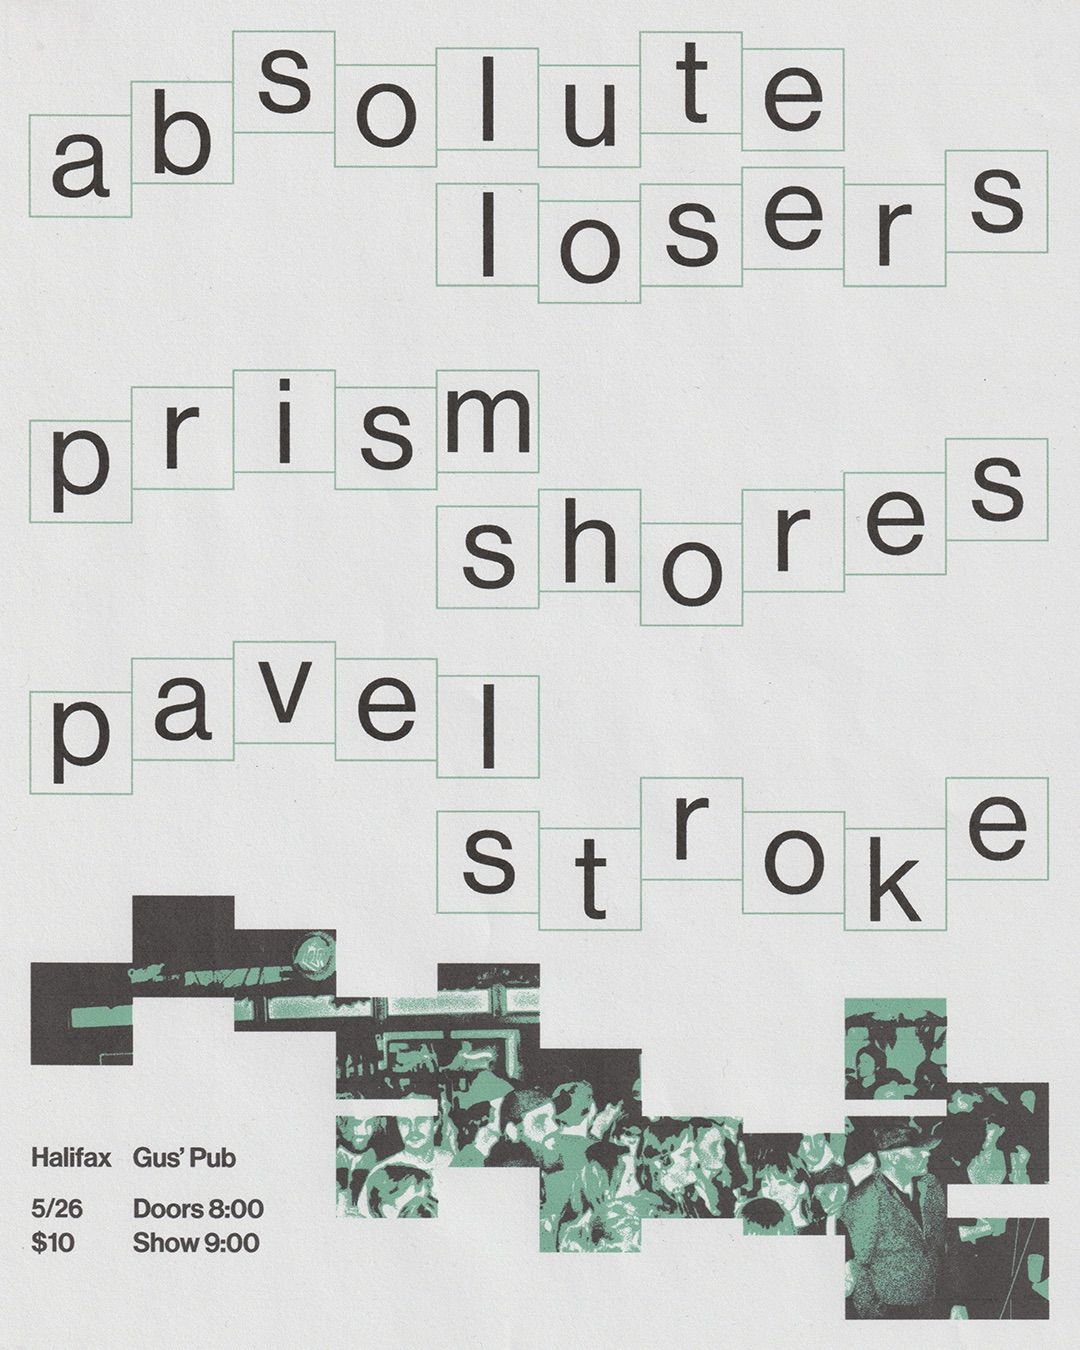 Absolute Losers + Prism Shores + Pavel Stroke | Gus\u2019 Pub